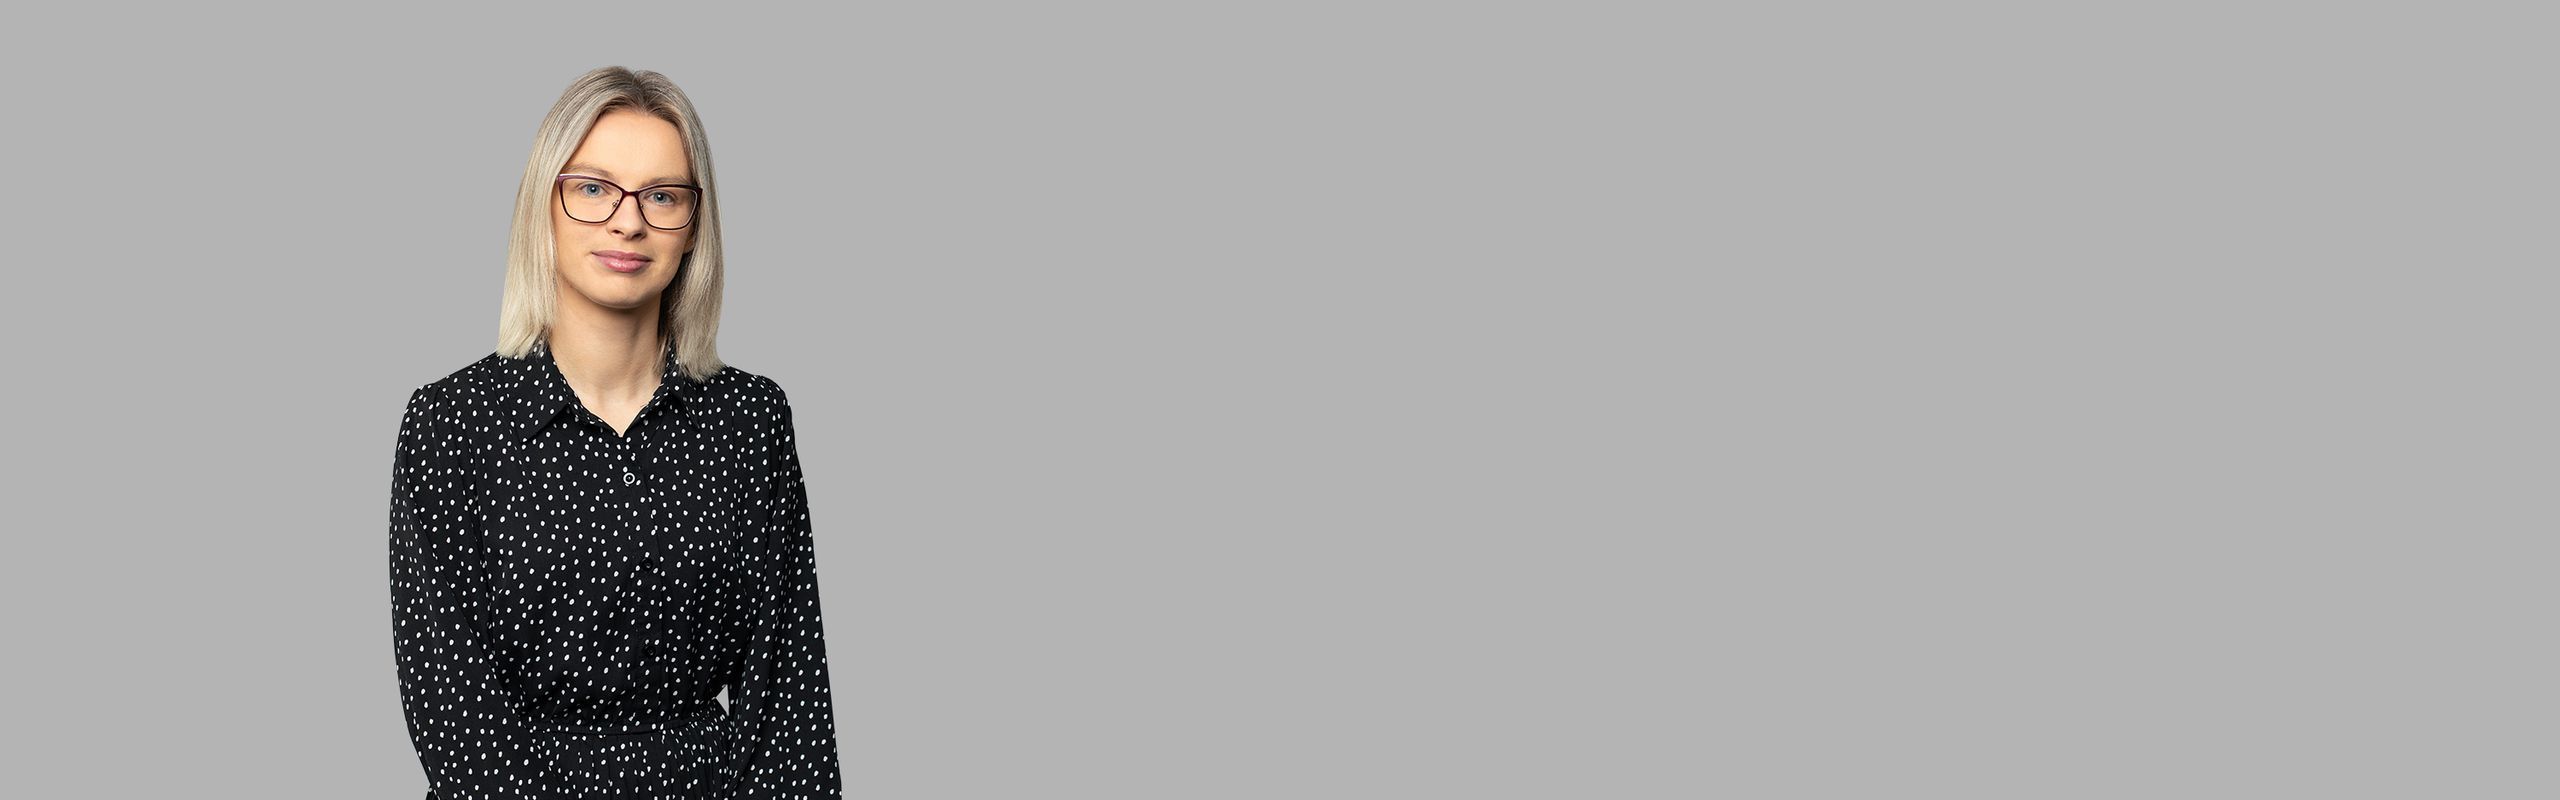 Elizabeth Murray - body image grey background